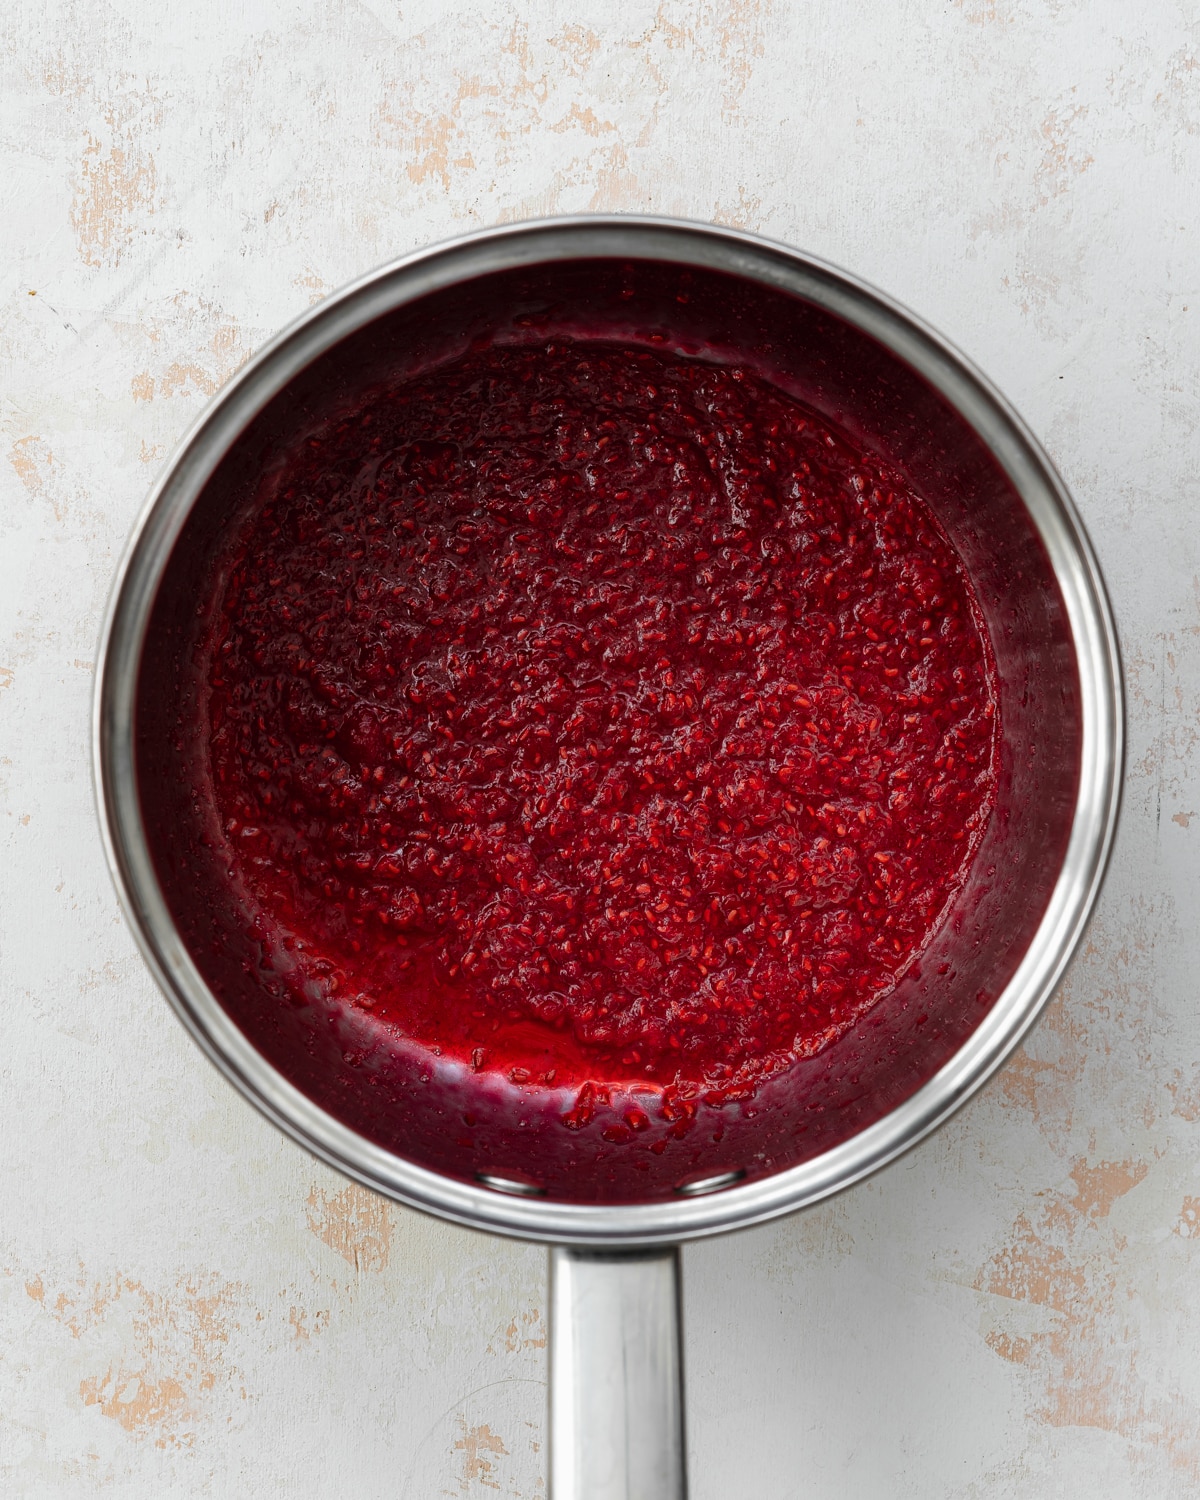 raspberry coulis in a saucepan.